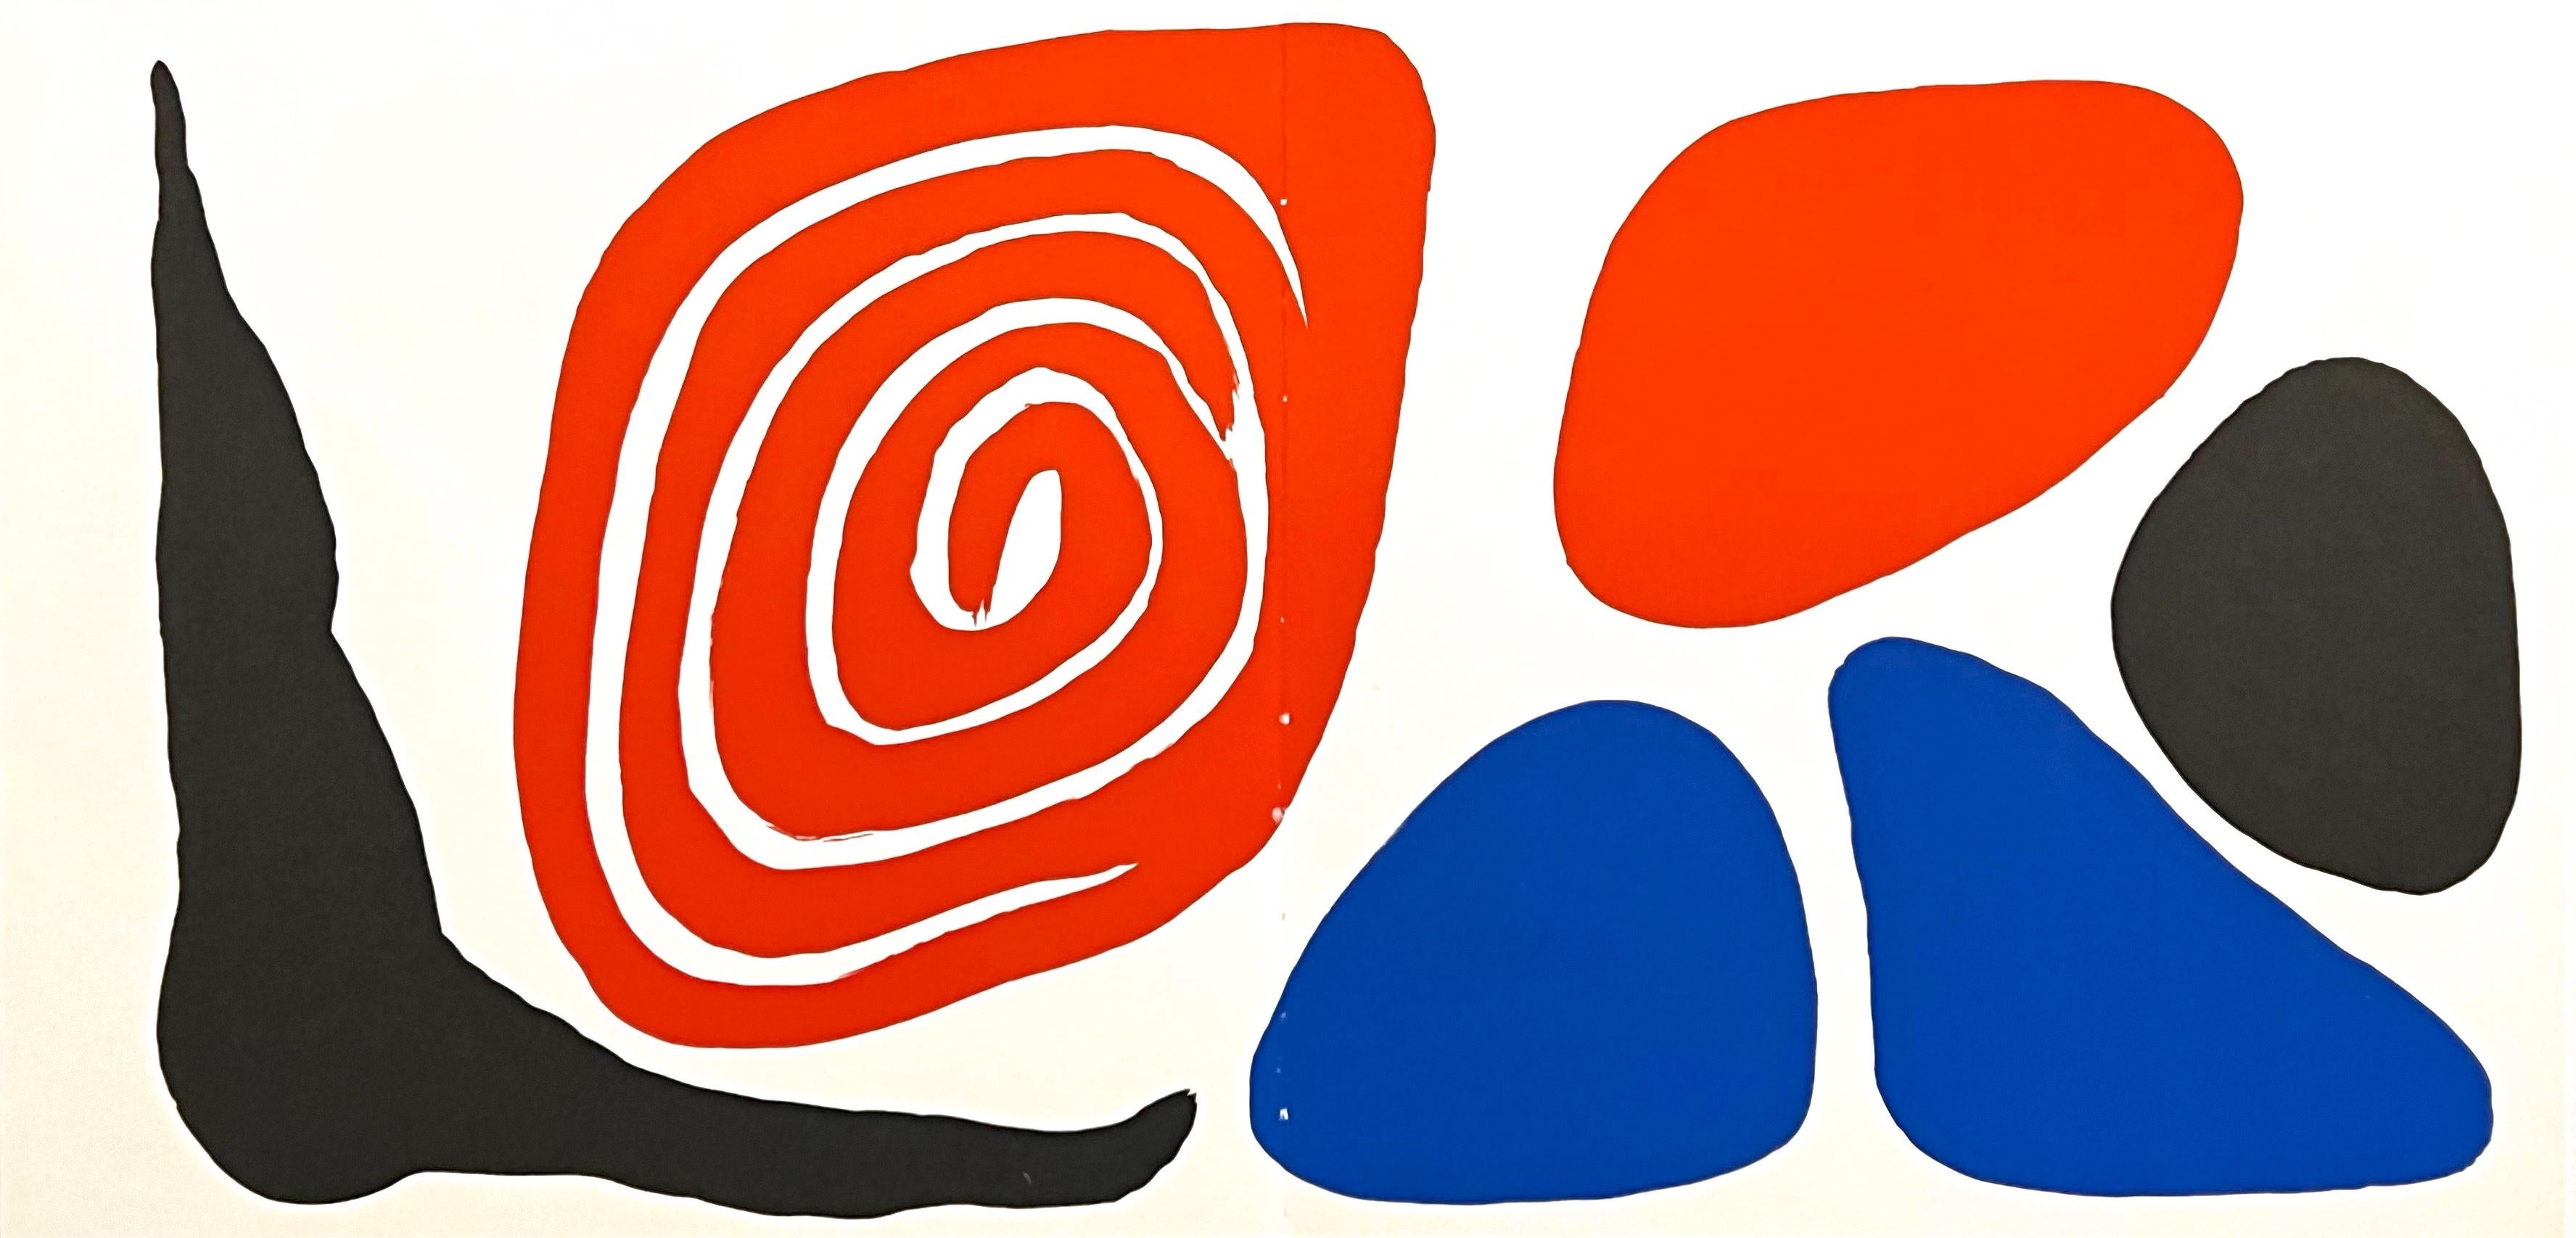 Alexander Calder Abstract Print - Calder, Composition, Autobiographie/Traduction, 1972 (after)